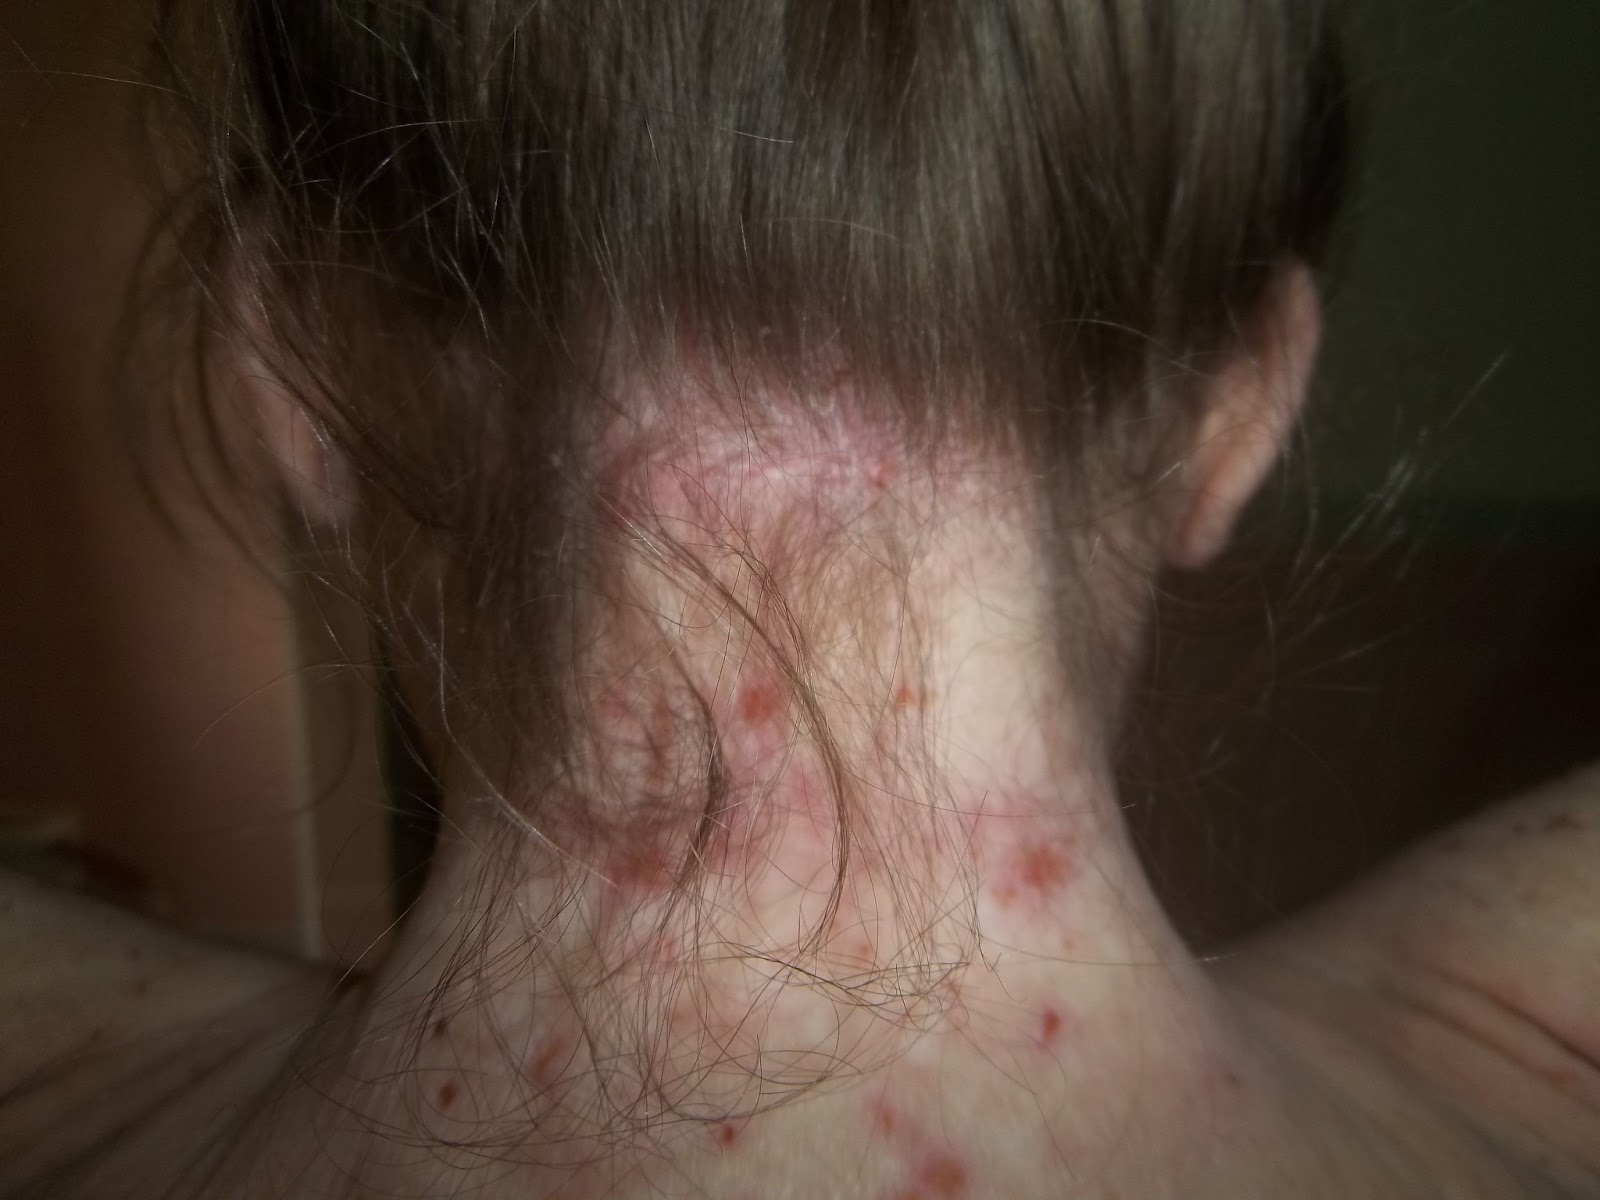 Doctor insights on: Rash On Back Of Neck Near Hairline